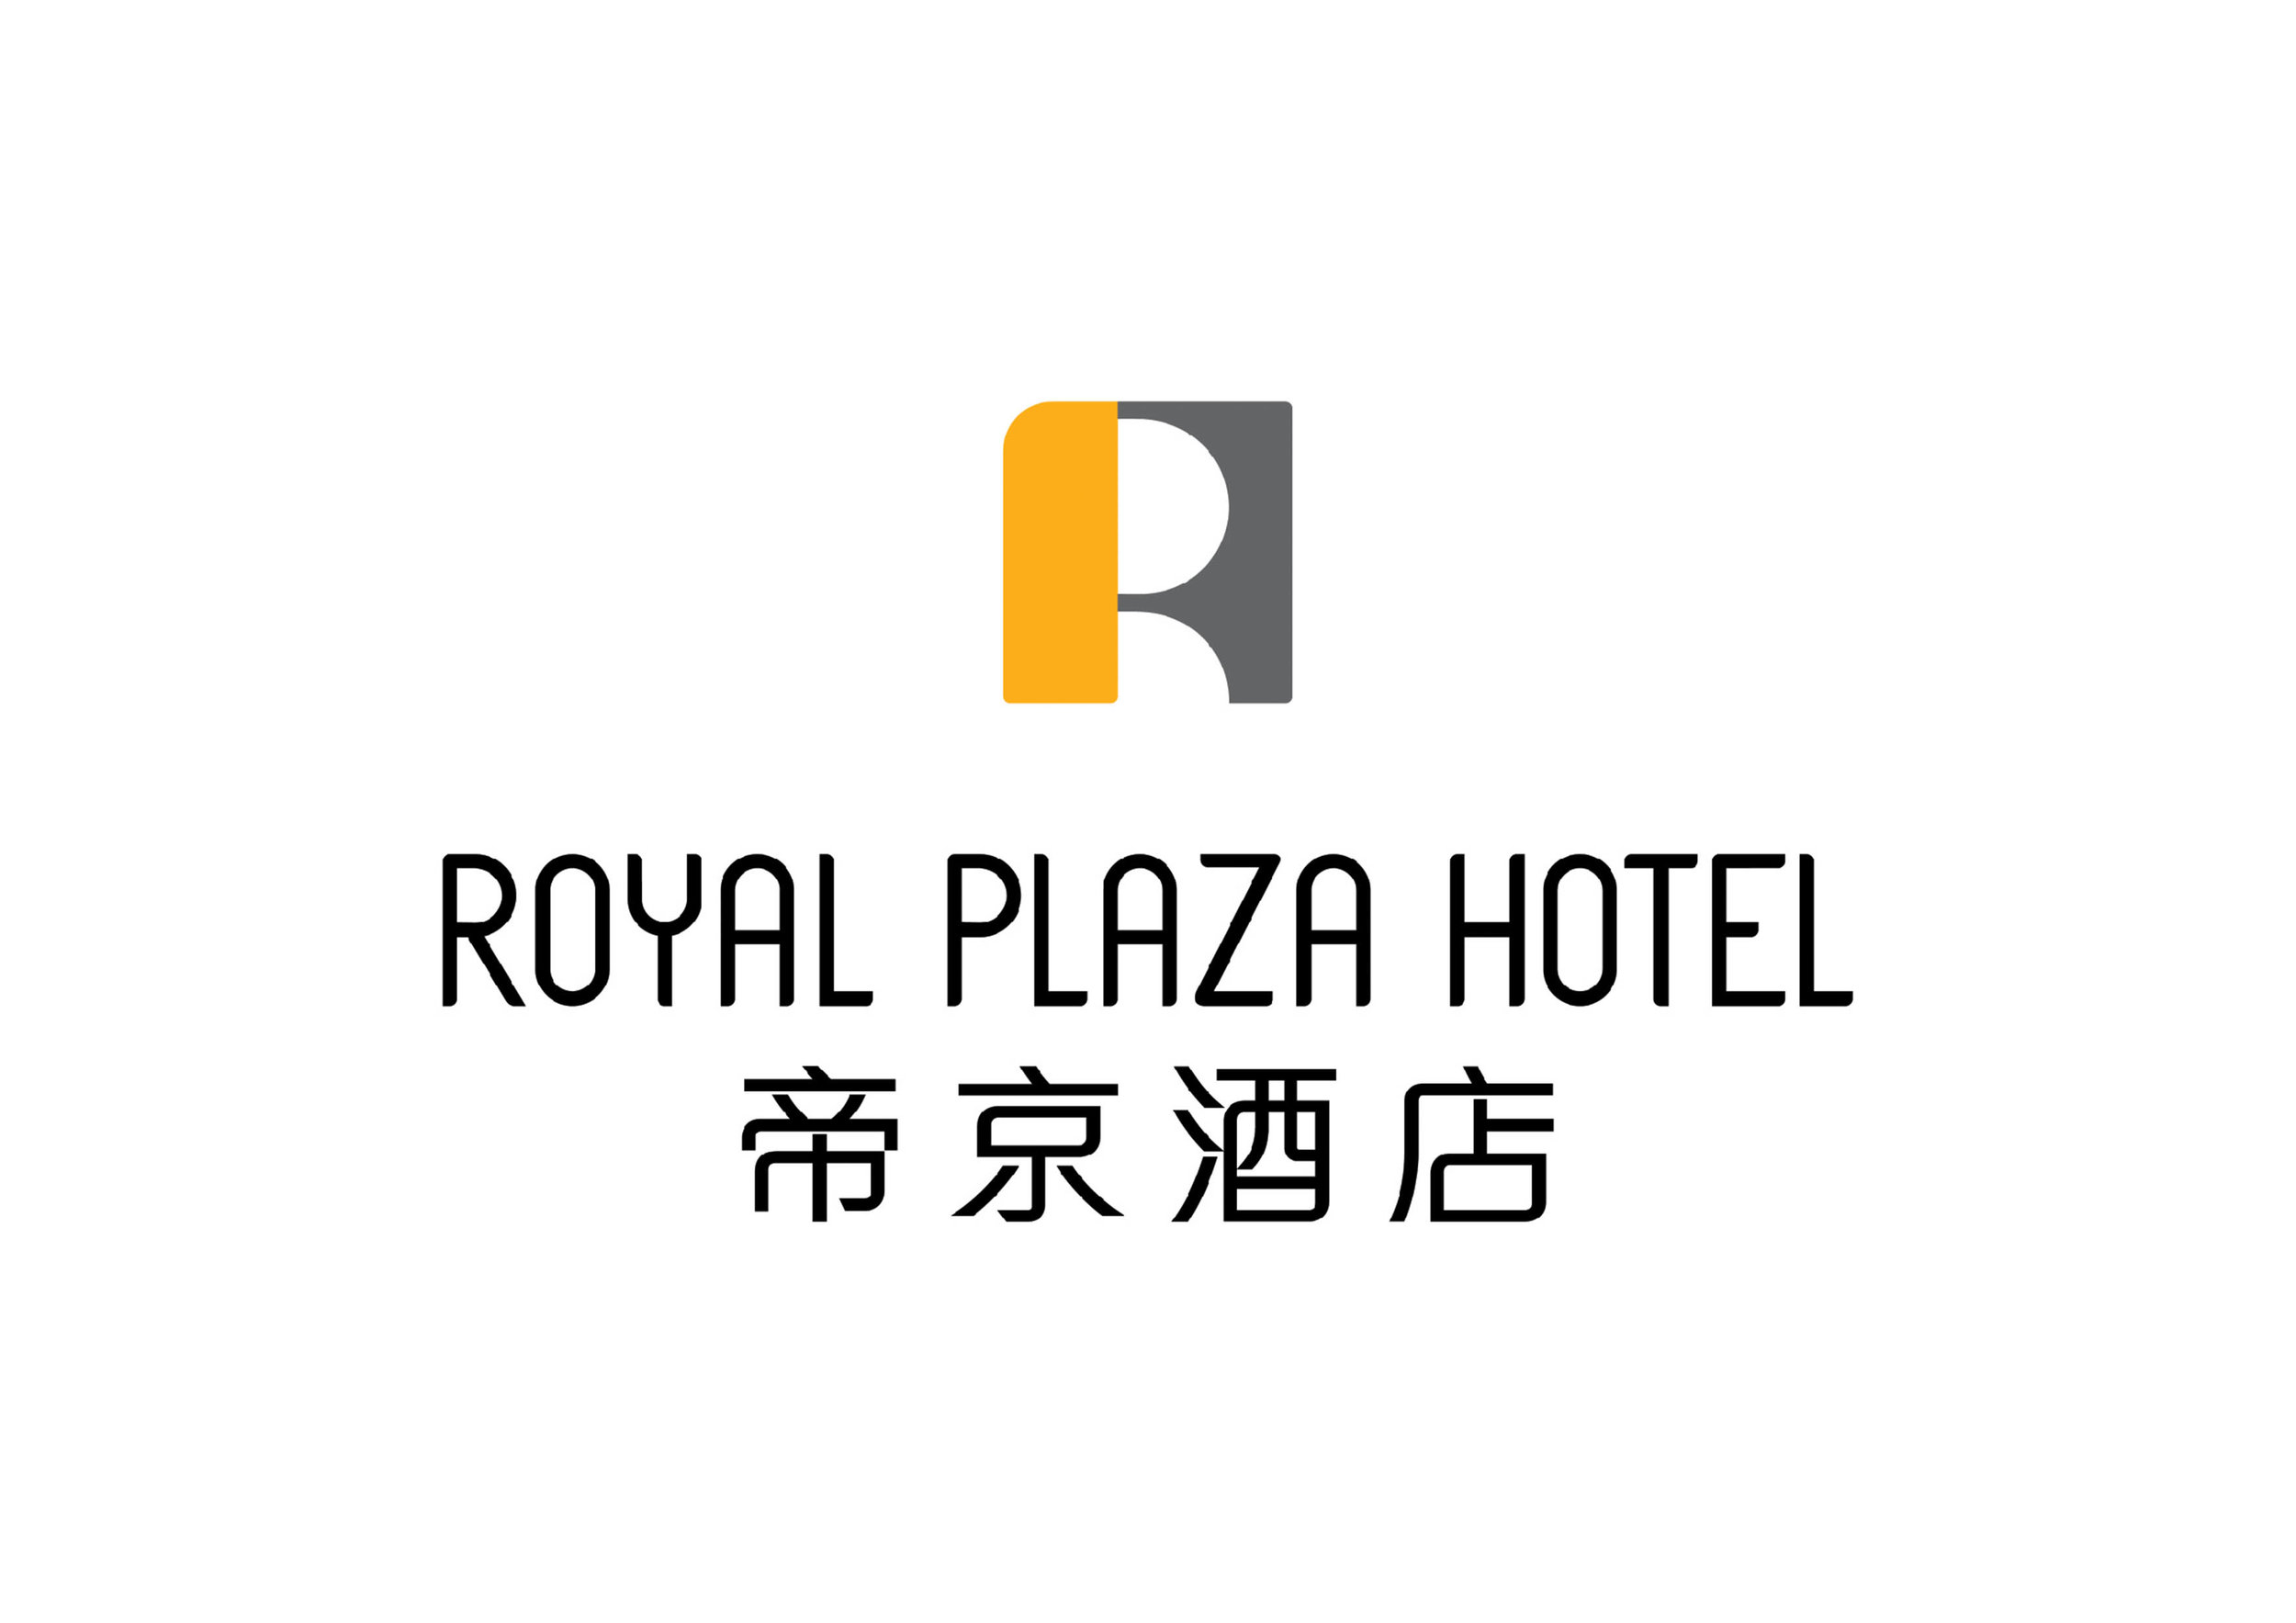  ..  Royal Plaza Hotel 